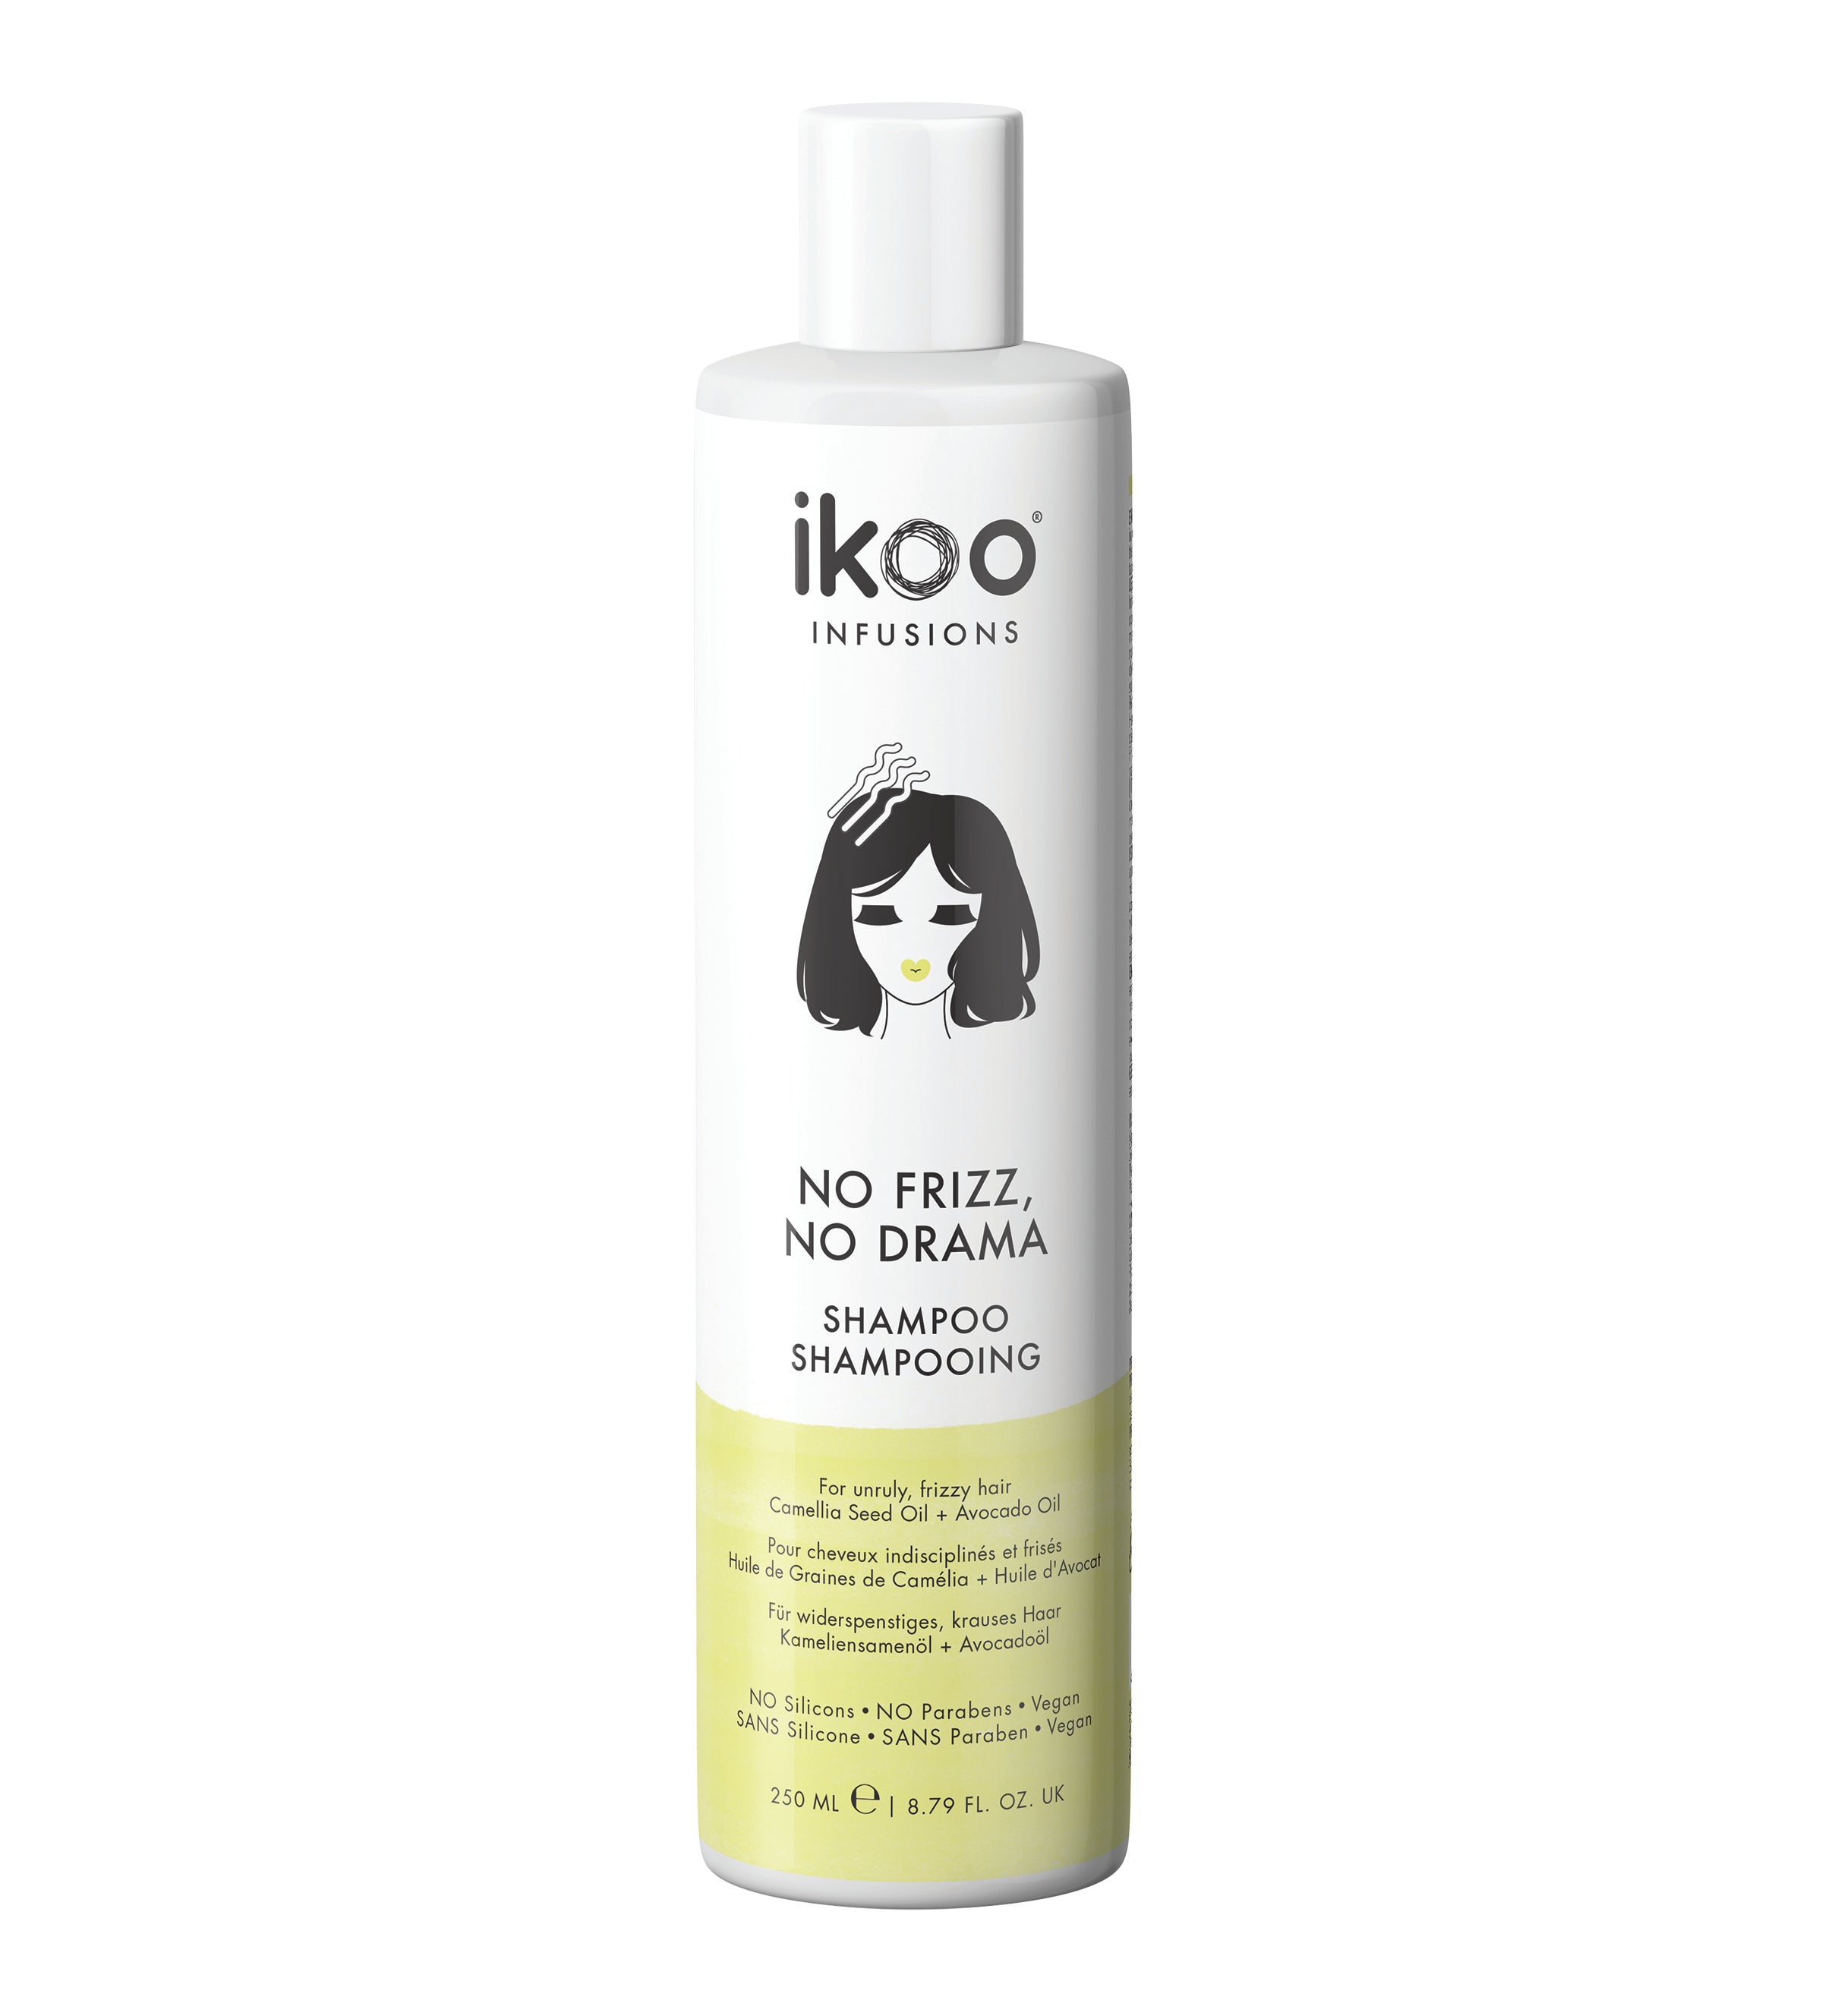 Ikoo Kit for Hydrate & Shine - 4pcs